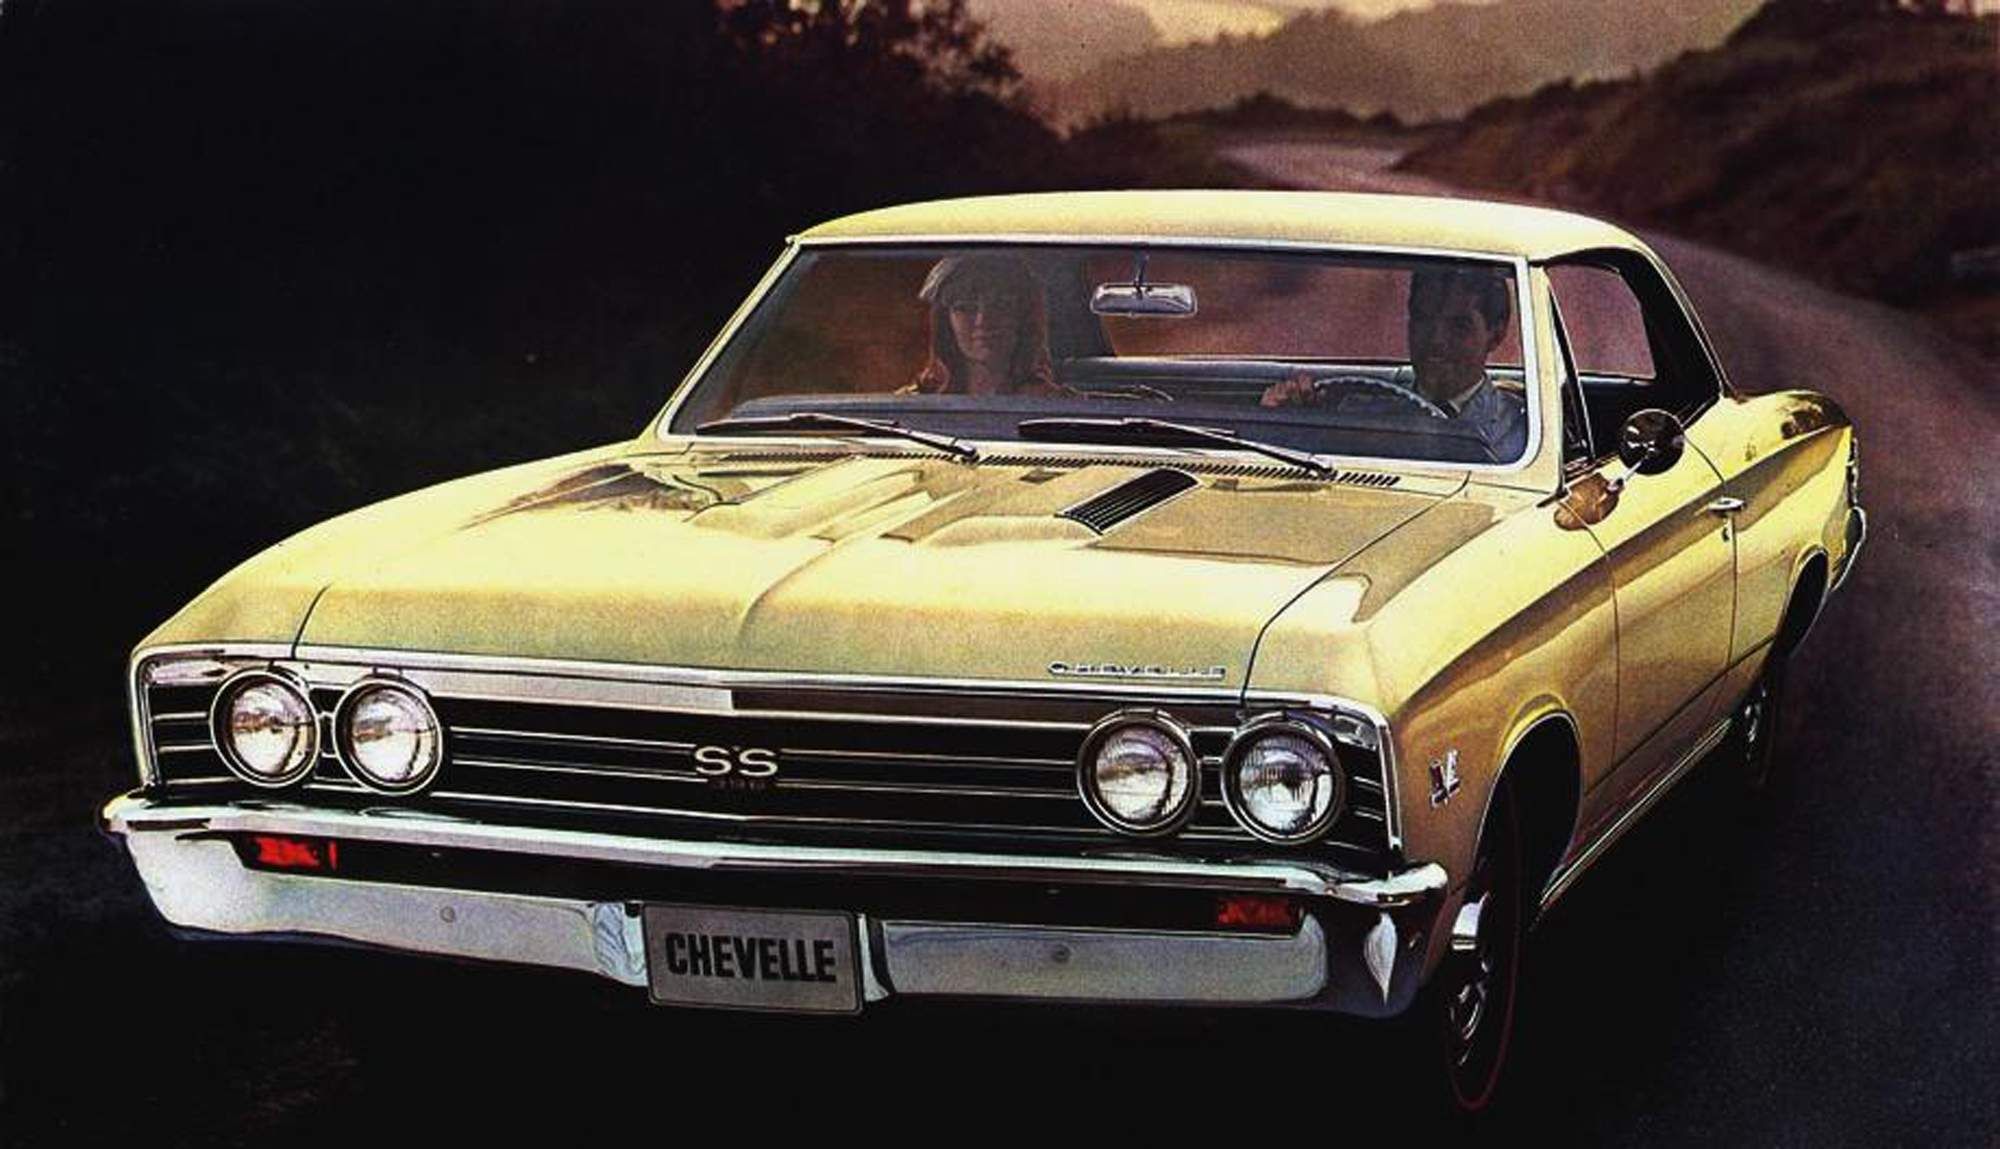 Original Chevy Chevelle poster